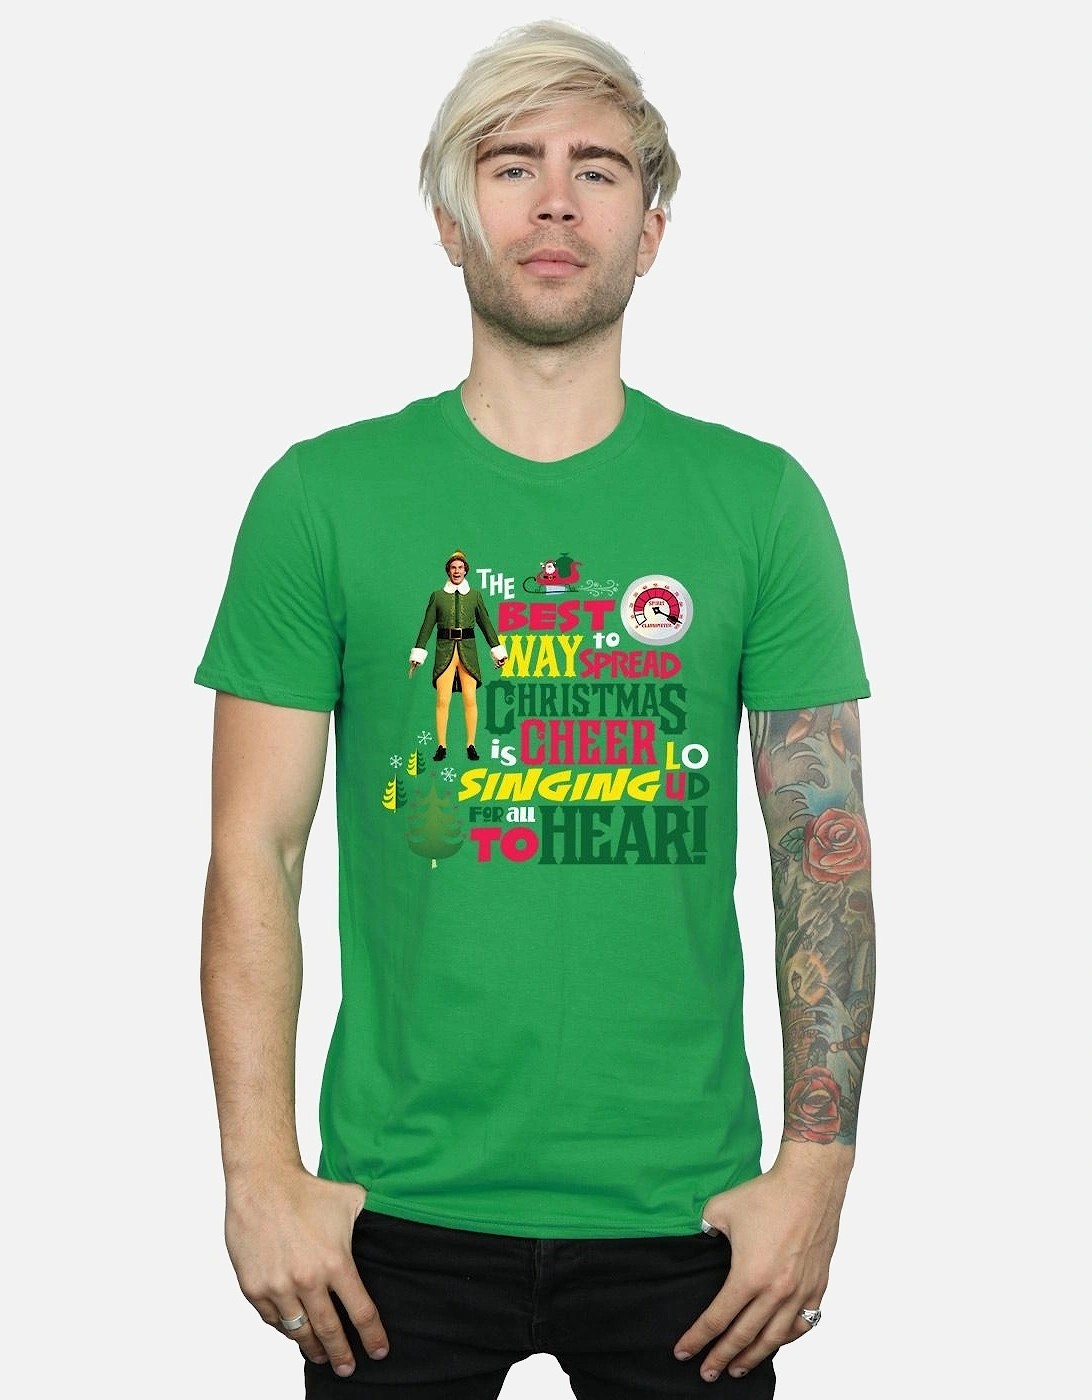 Mens Christmas Cheer T-Shirt